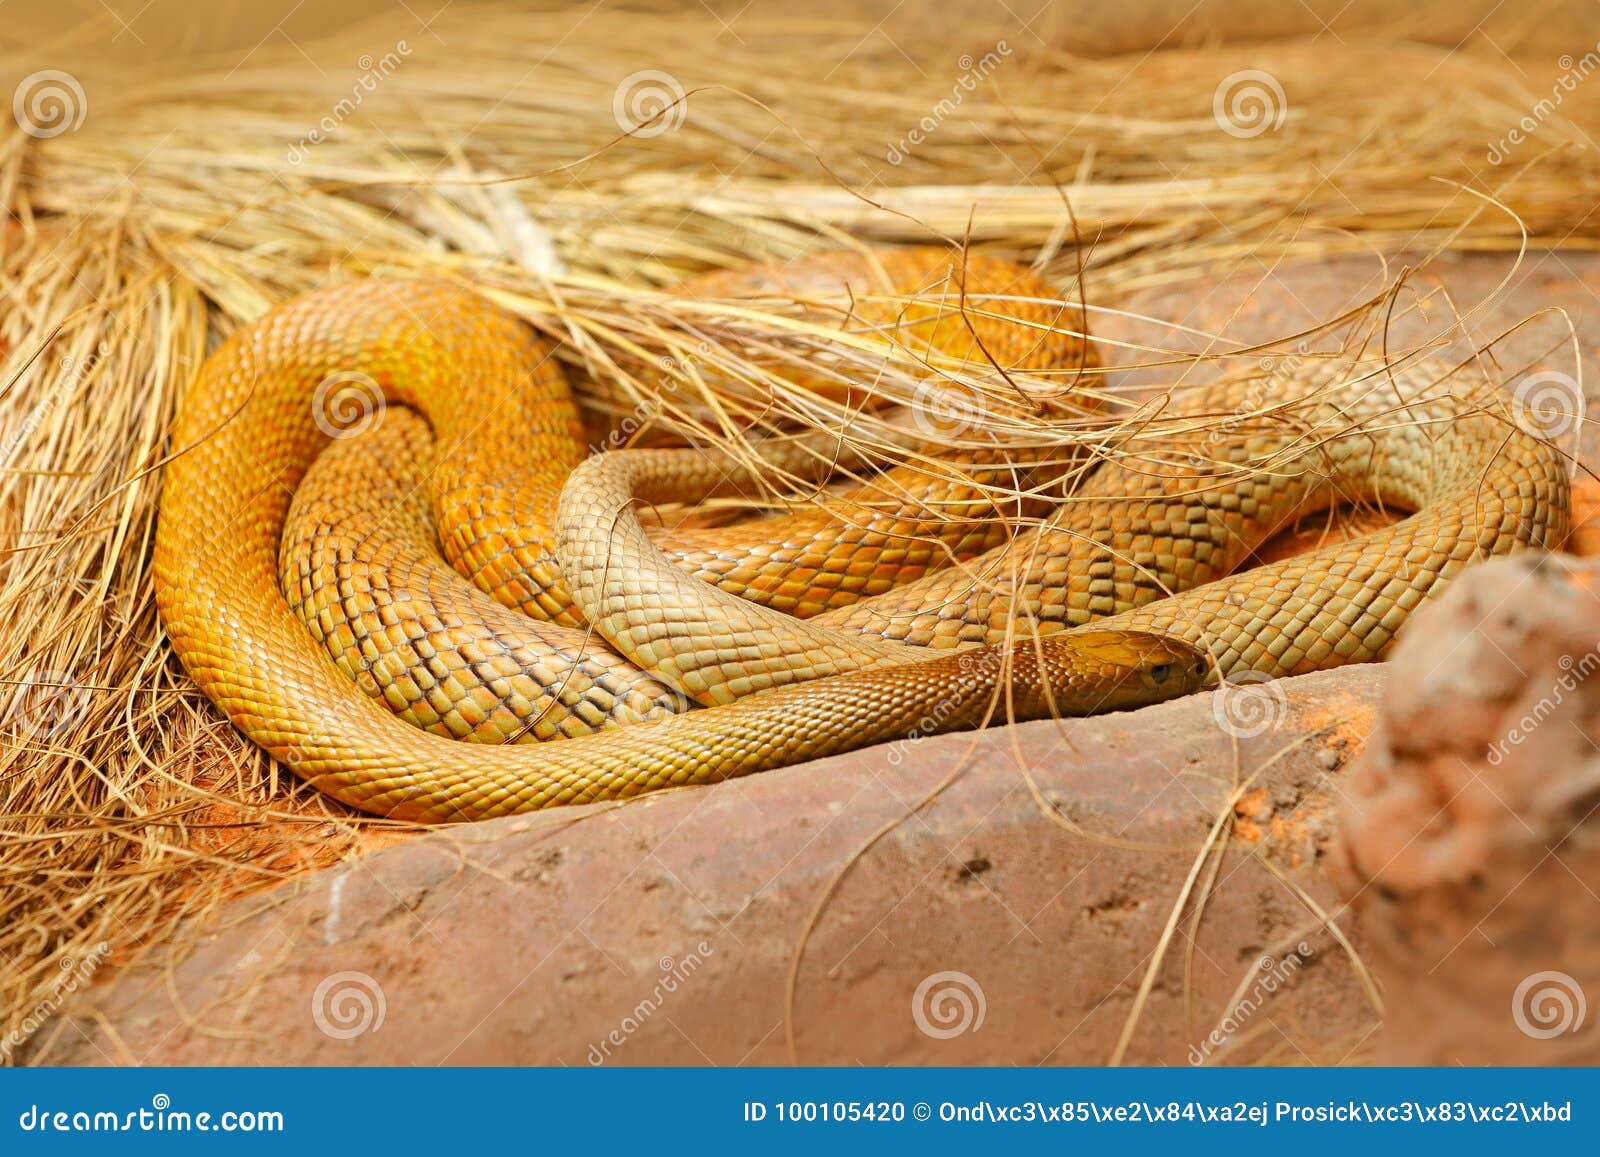 inland taipan, oxyuranus microlepidotus, australia, most poisonous snake. poison snake in the grass. danger animal from australia.